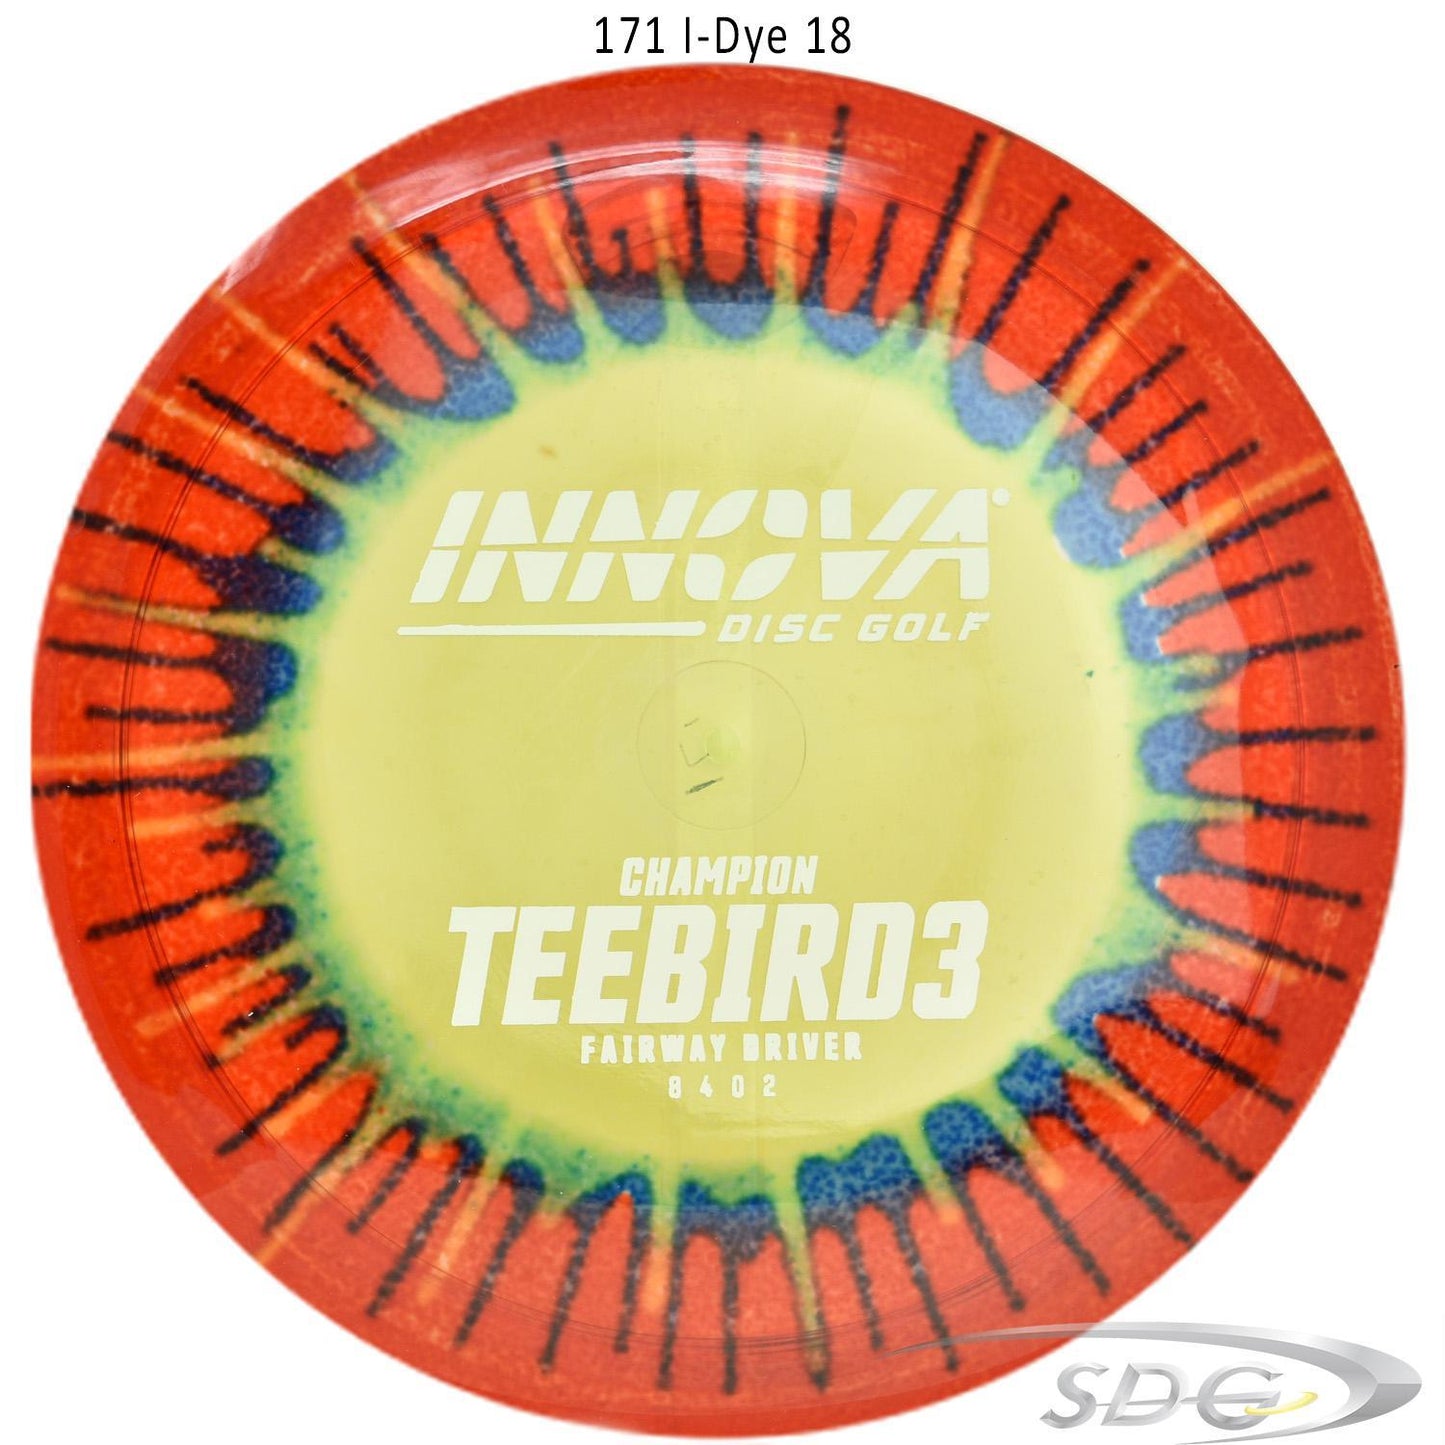 innova-champion-teebird3-i-dye-disc-golf-fairway-driver 171 I-Dye 18 